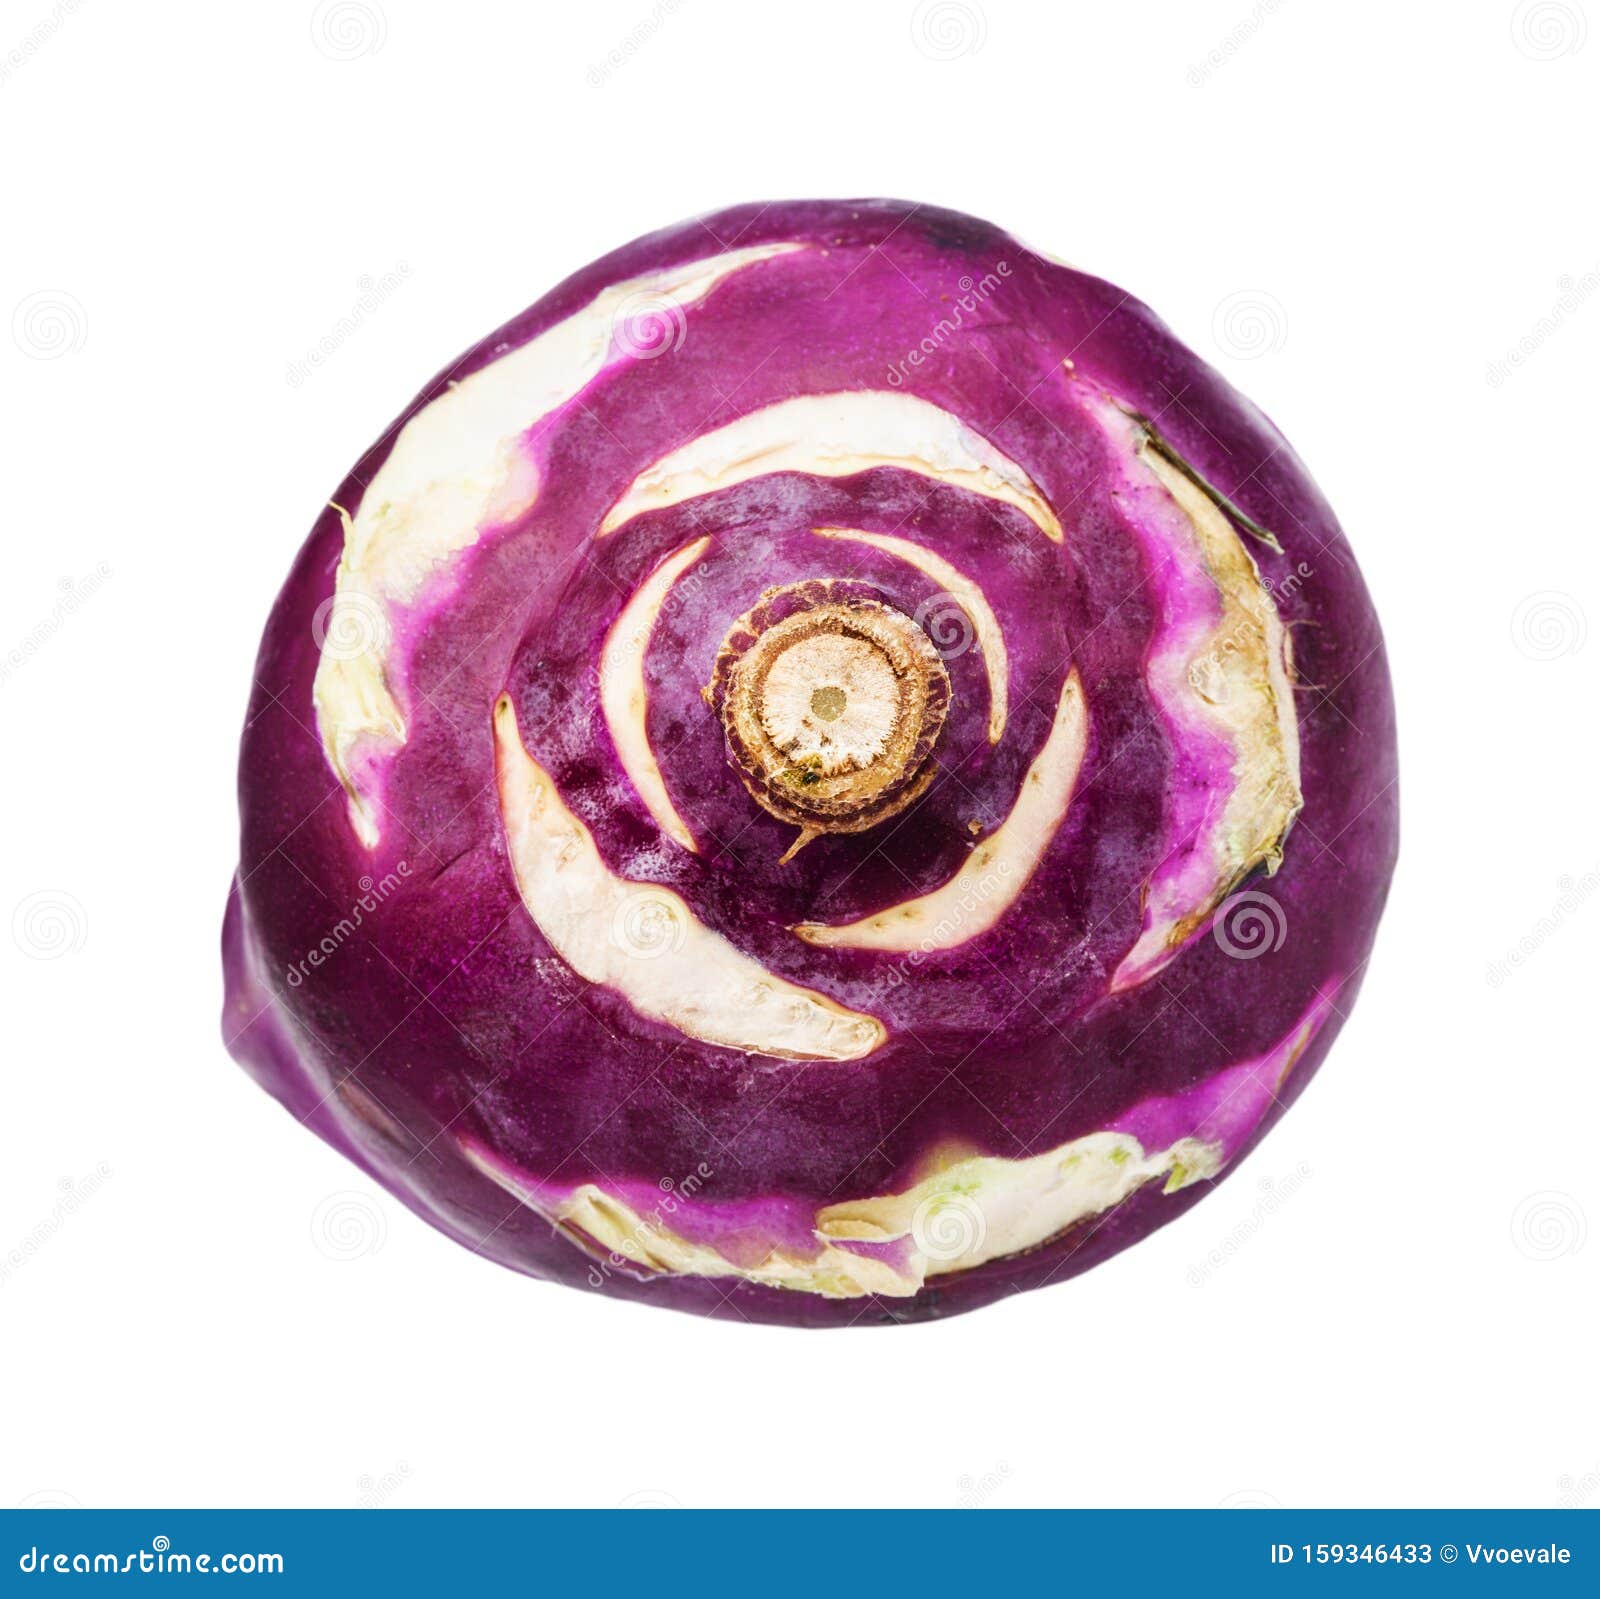 ripe taproot of purple kohlrabi cabbage 